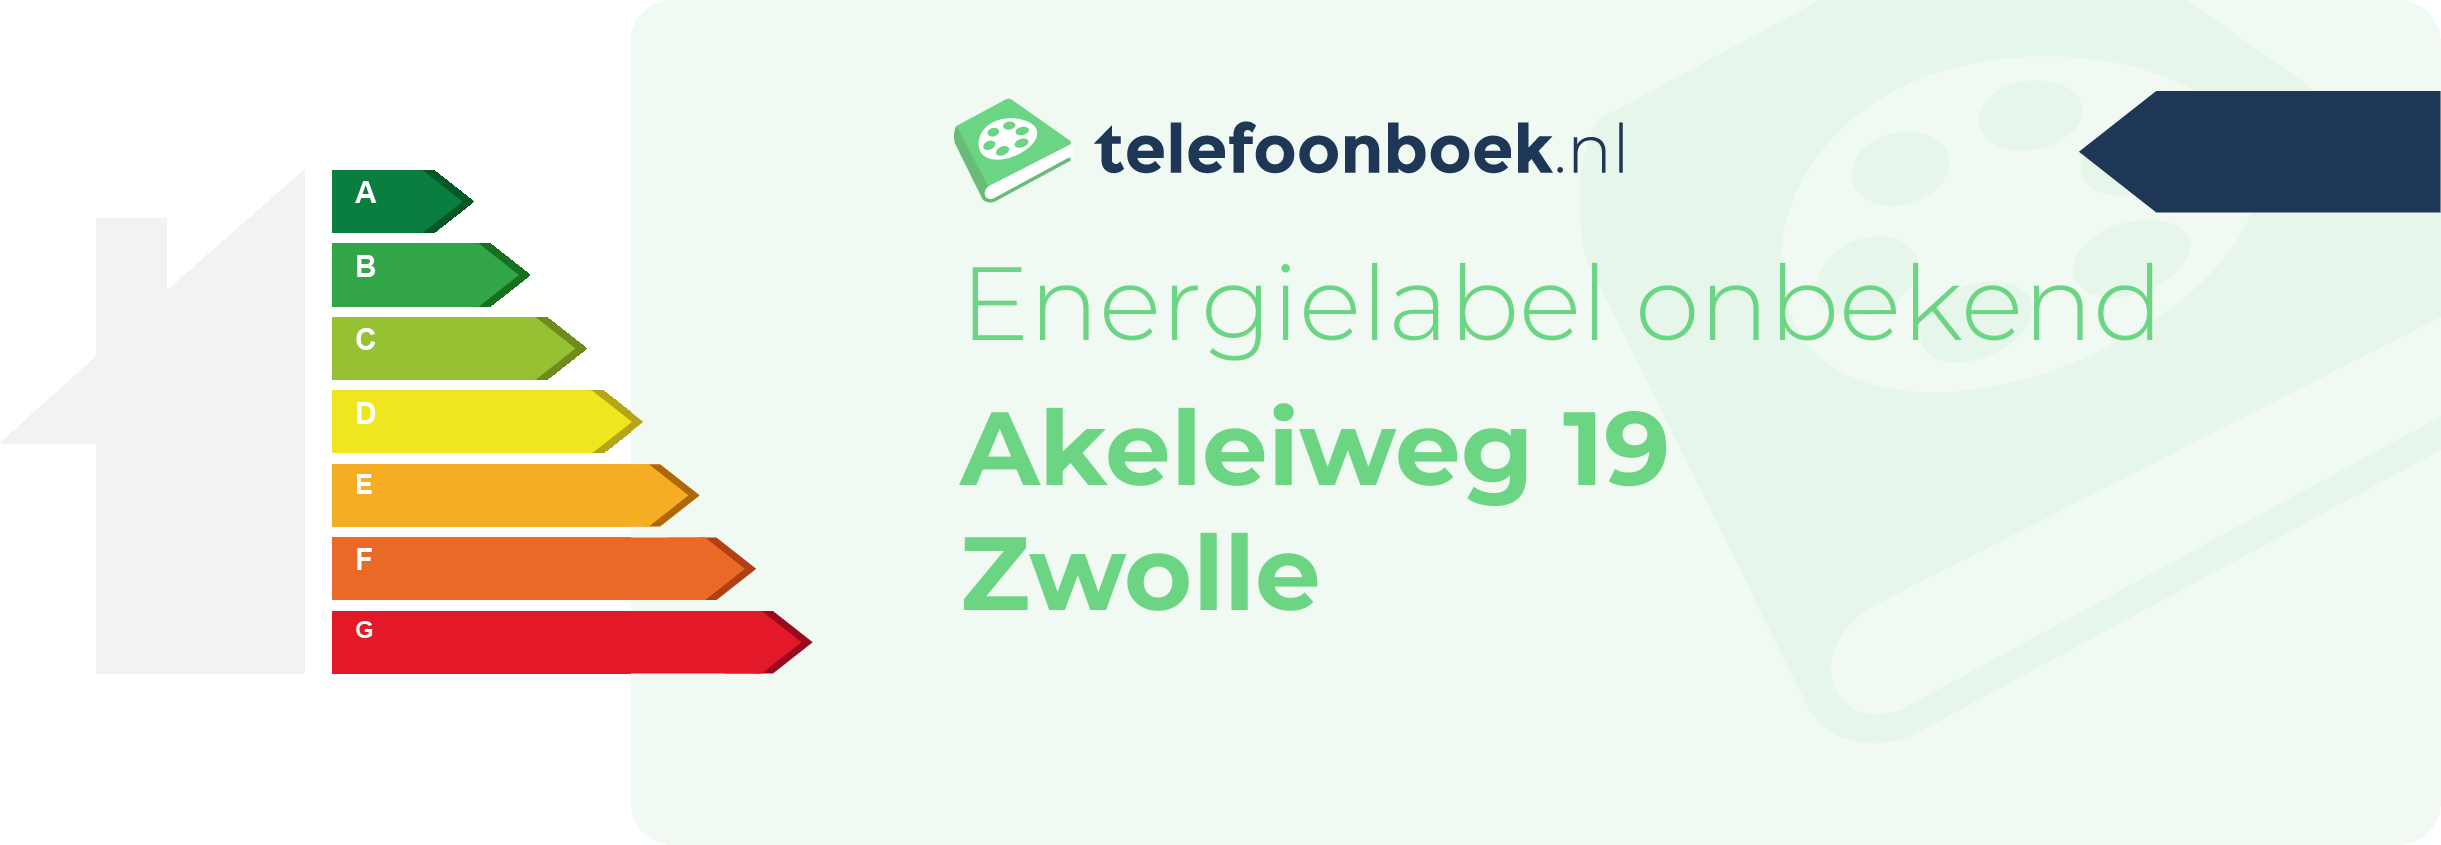 Energielabel Akeleiweg 19 Zwolle